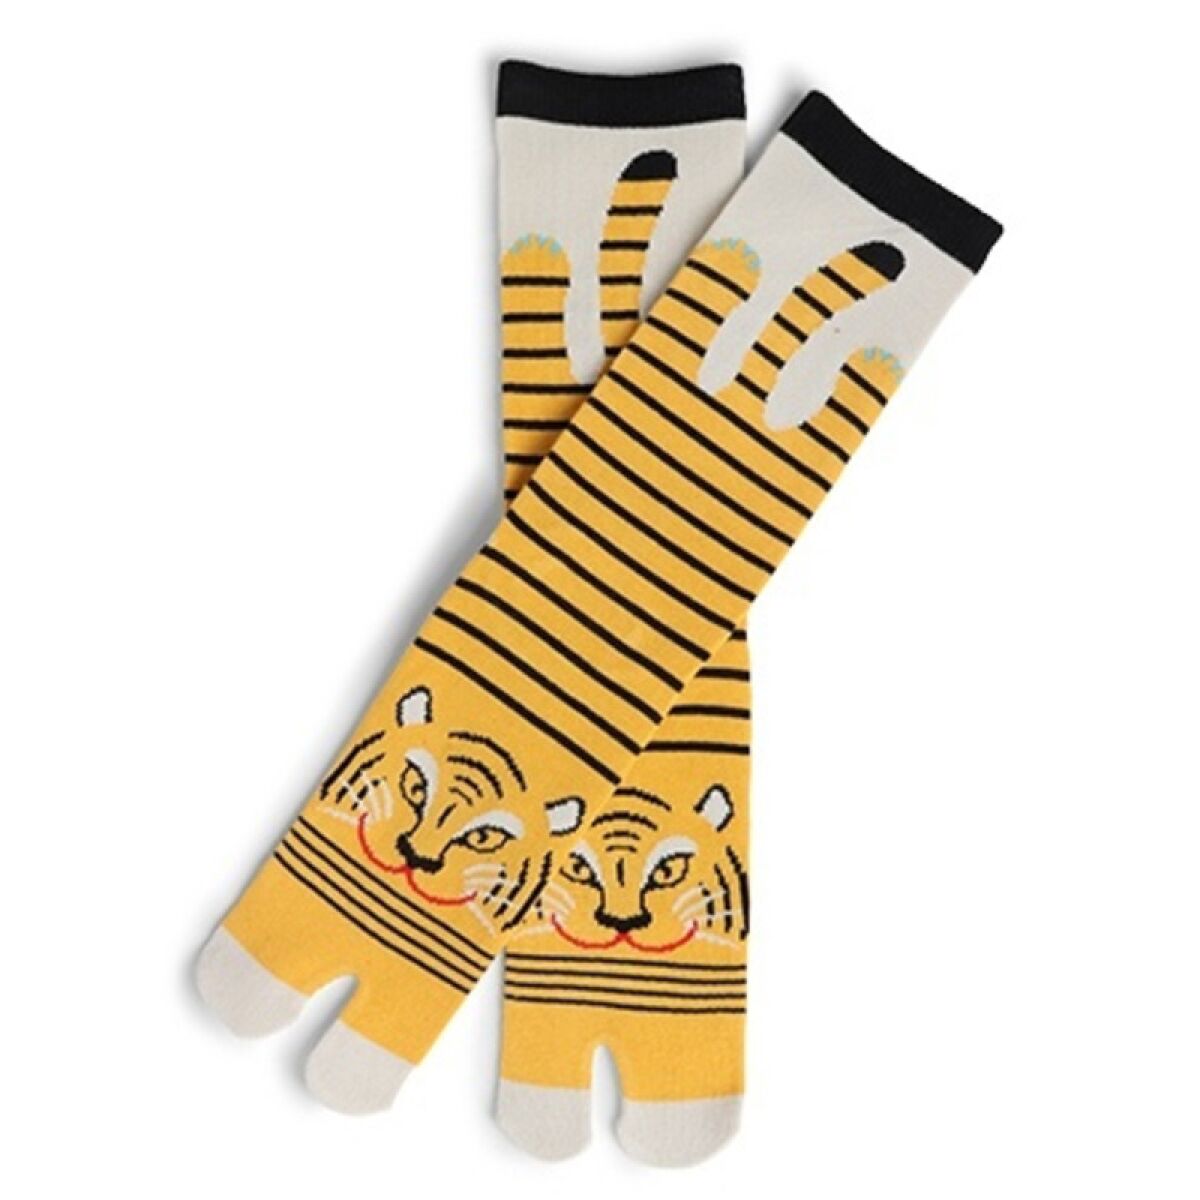 A pair of tiger-print socks